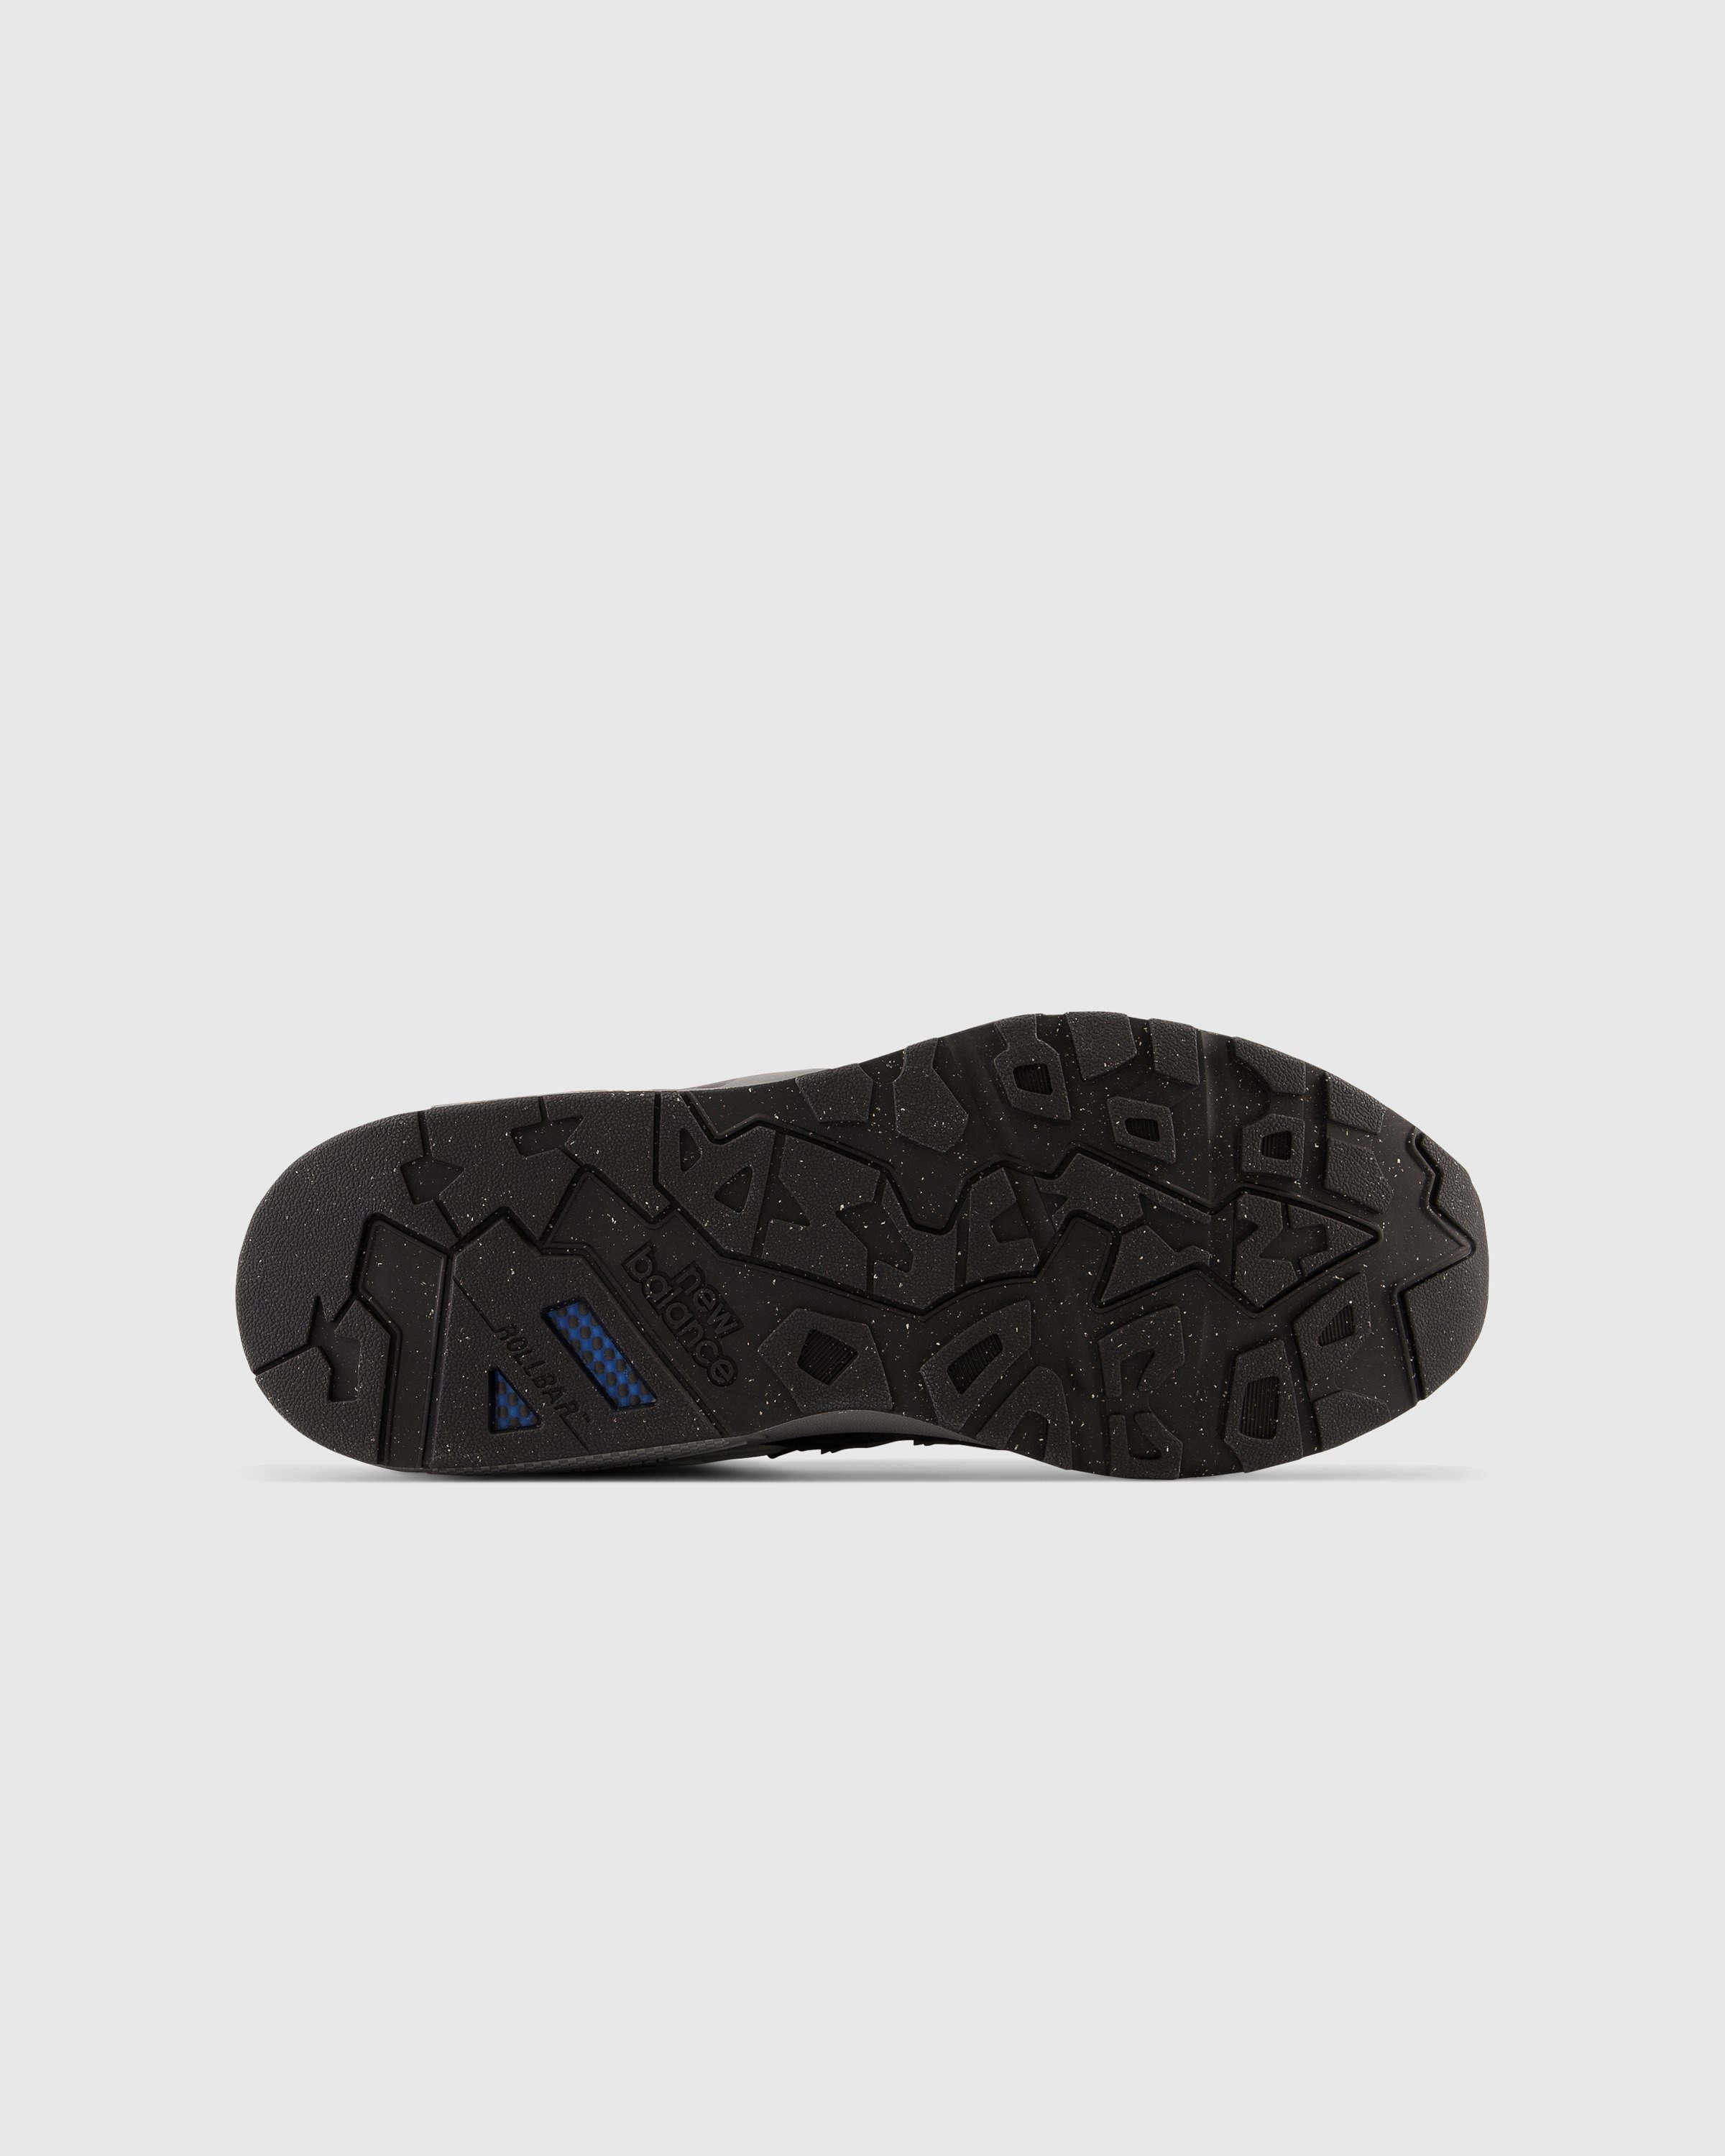 New Balance – MT 580 MDB Black - Sneakers - Black - Image 6